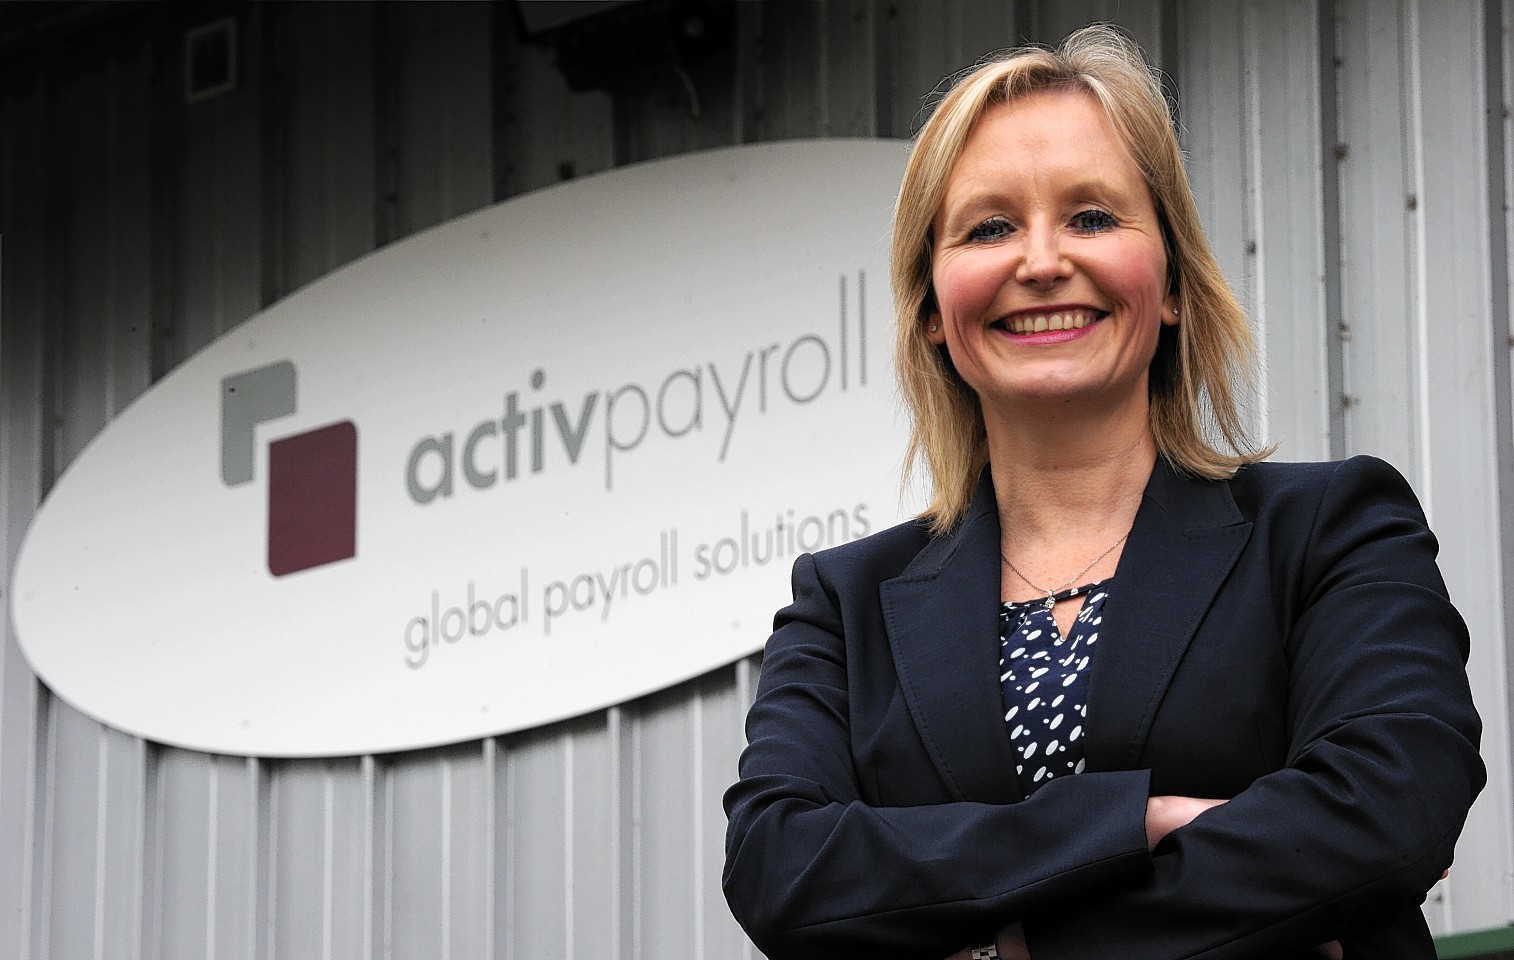 Activpayroll chief executive Alison Sellar